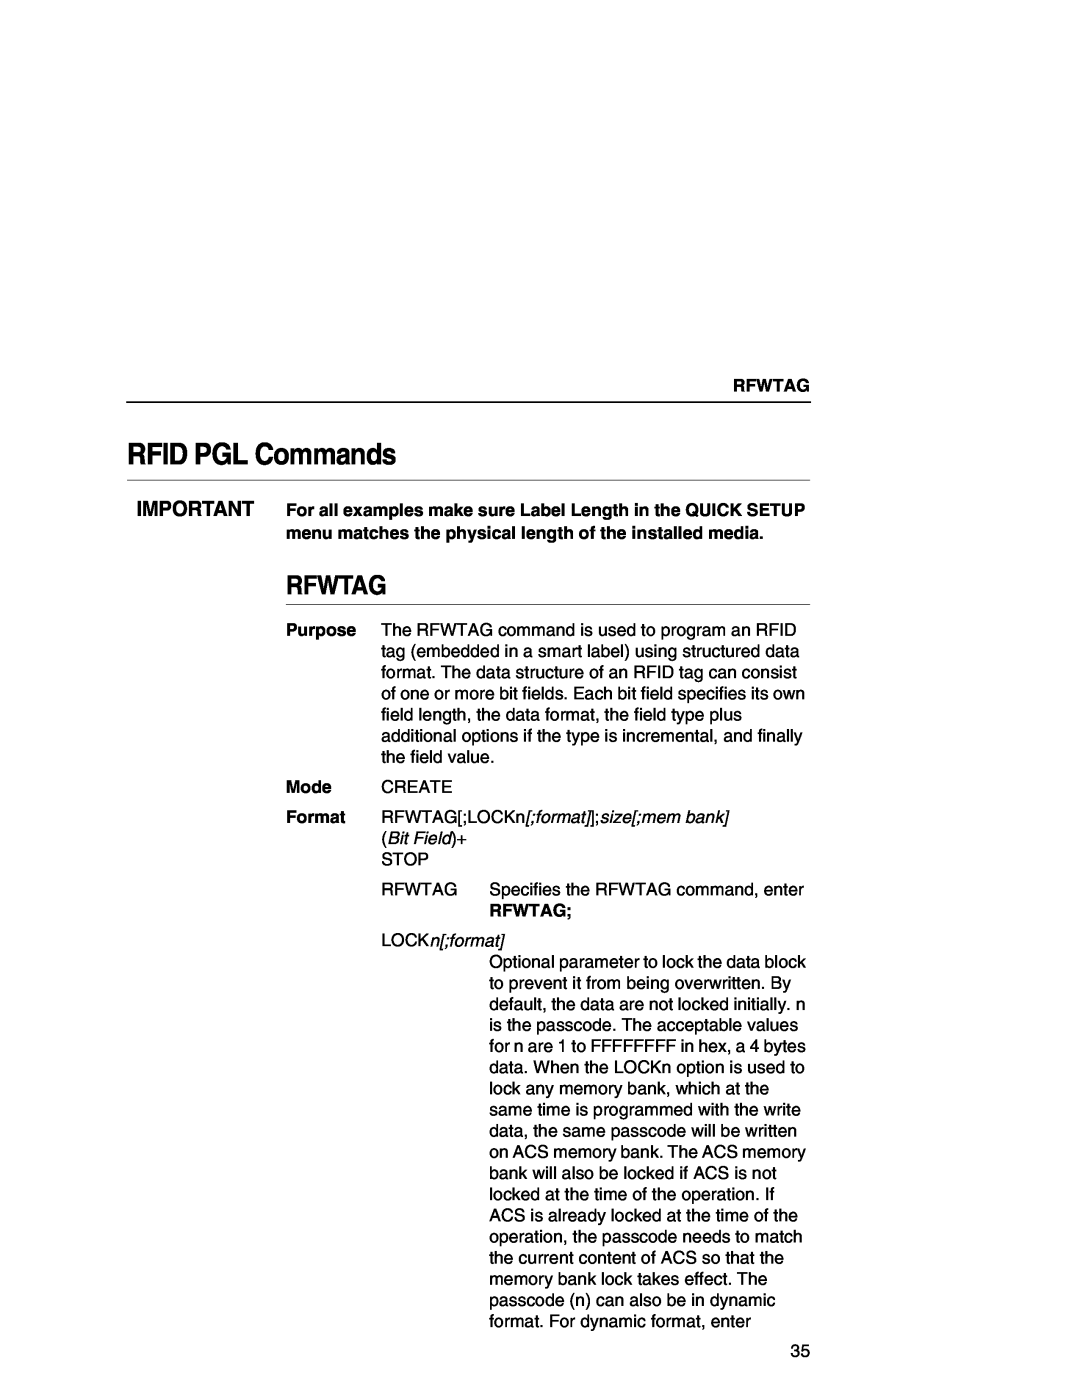 Printronix SL5000r MP manual RFID PGL Commands, Rfwtag 